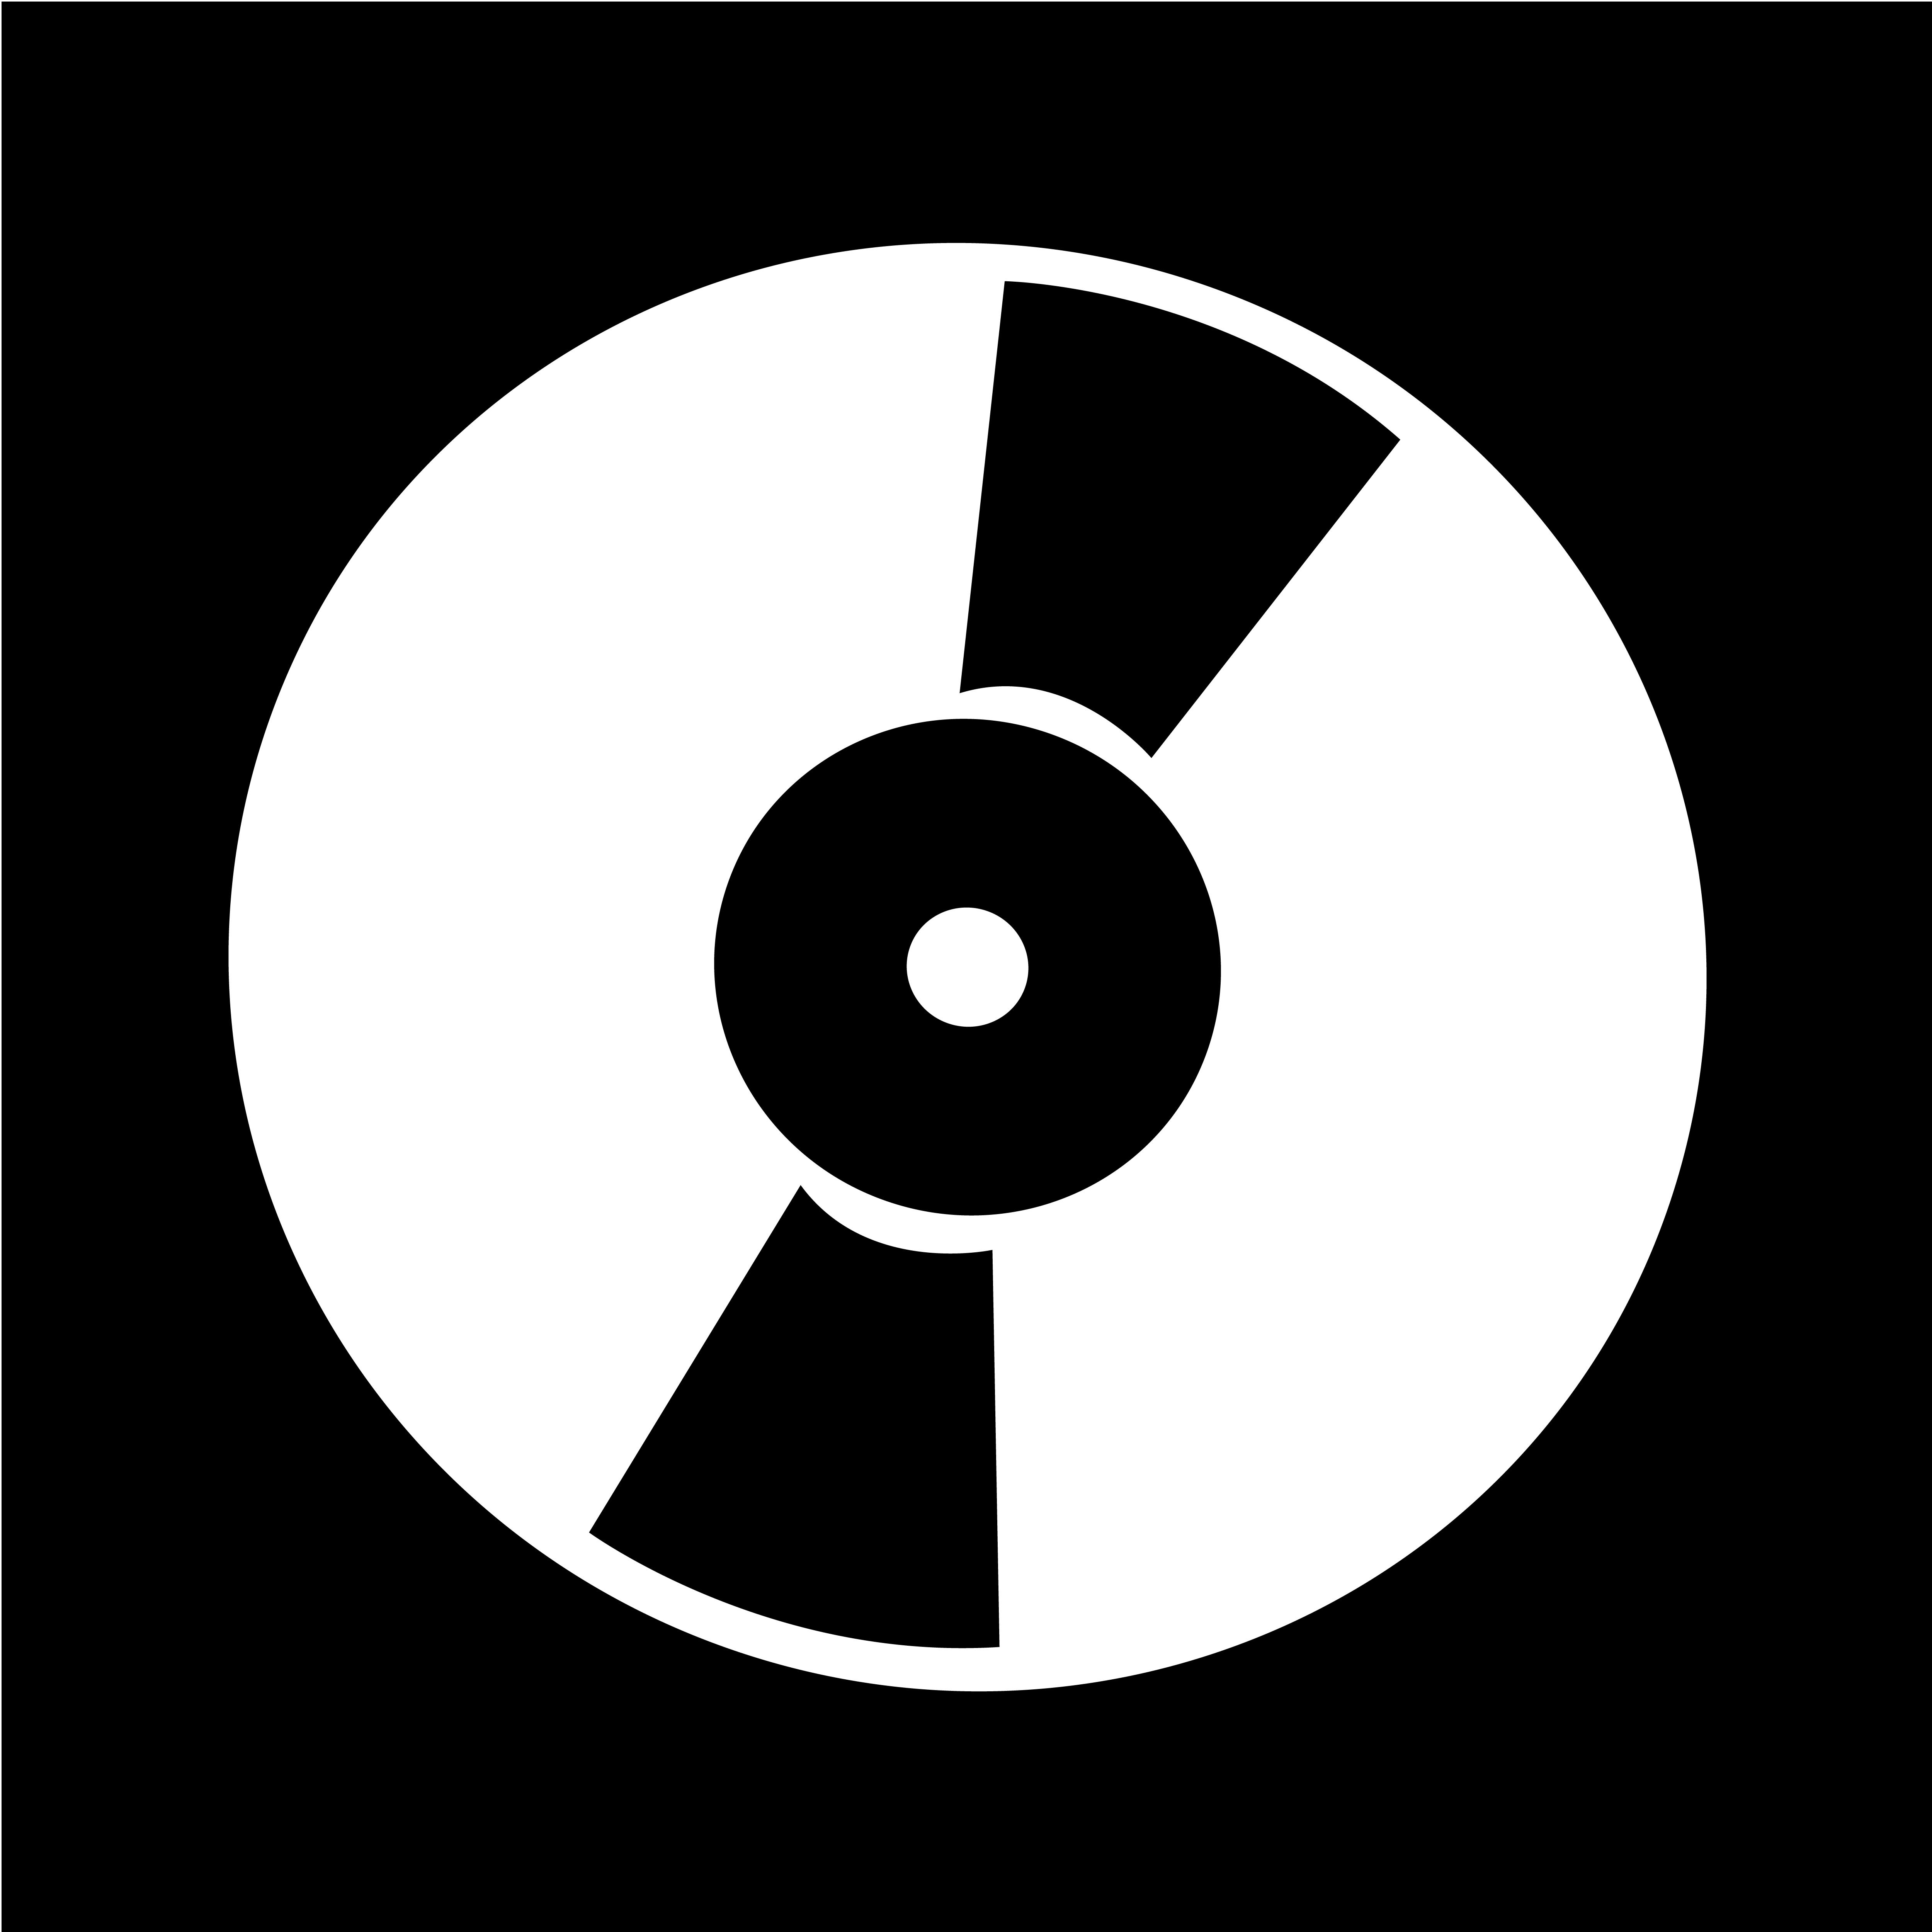 Download Retro vinyl record icon vector illustration - Download ...